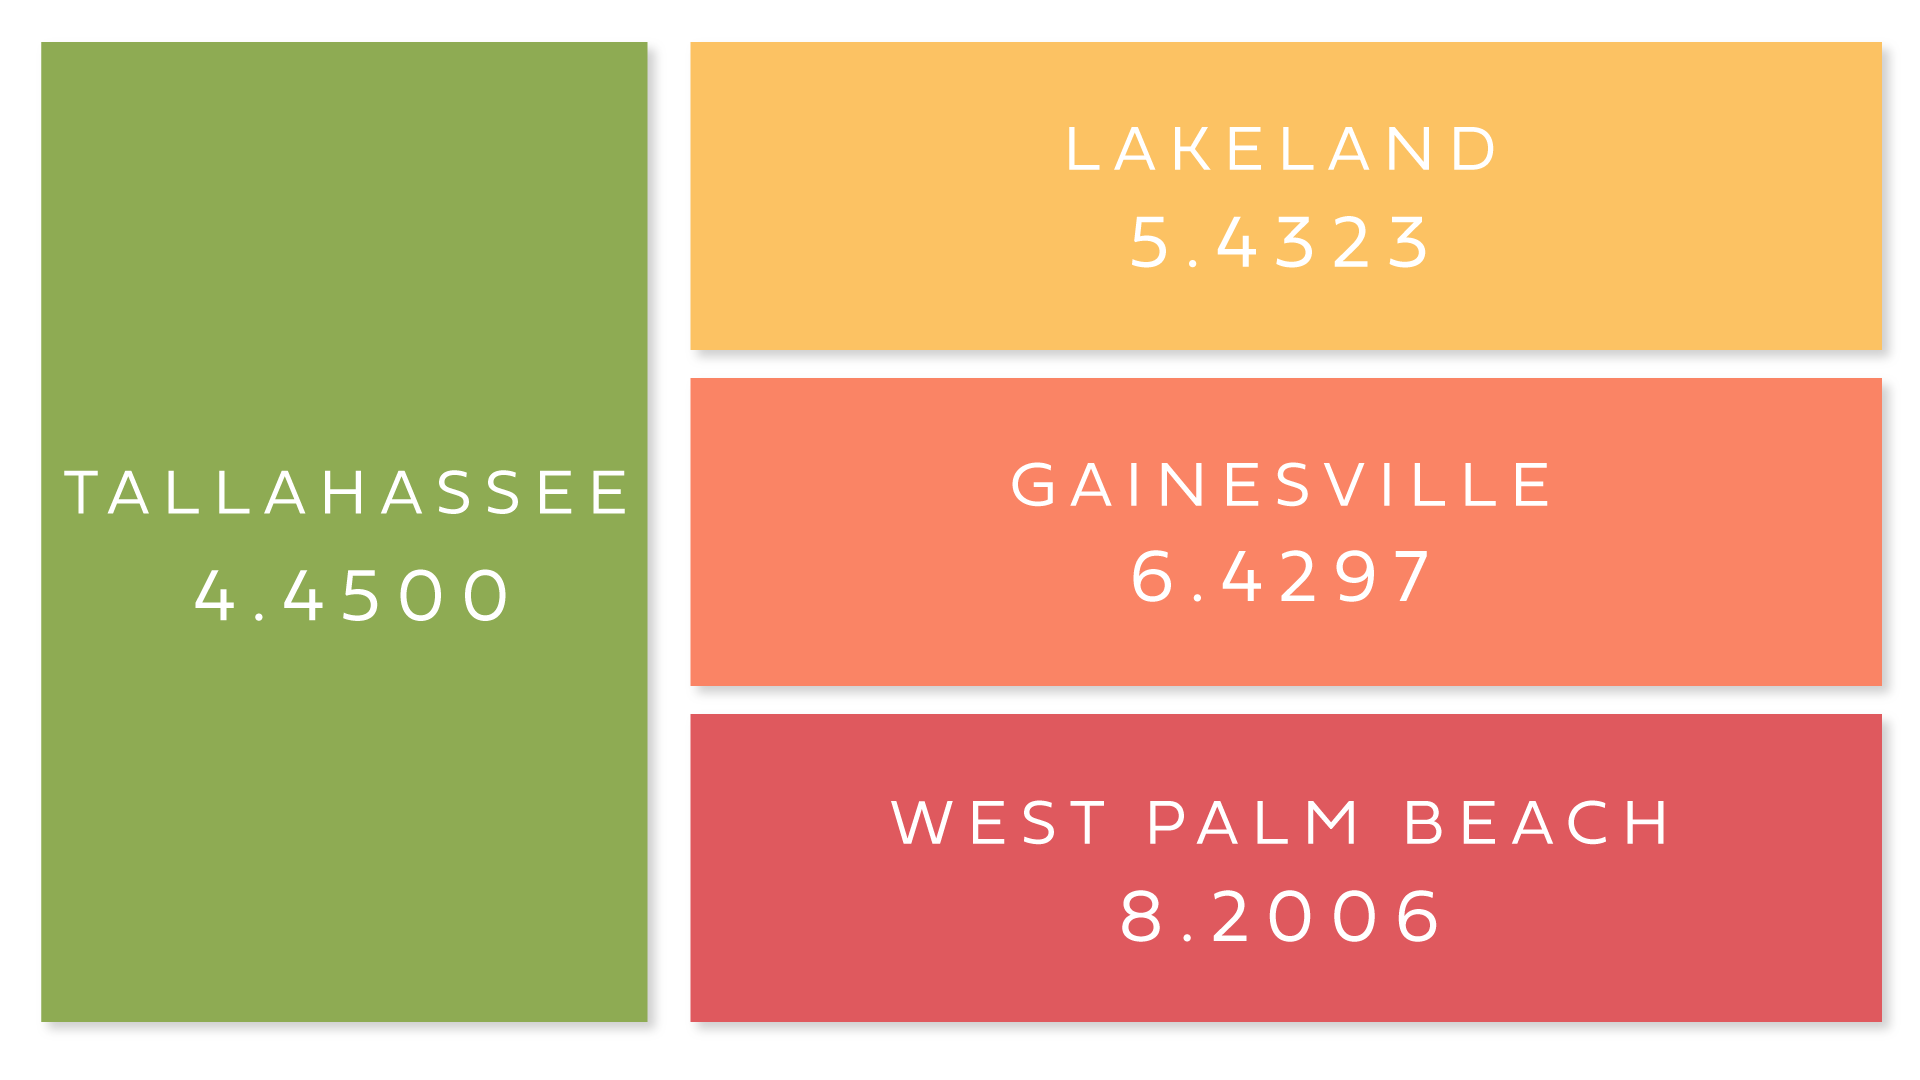 2023 Millage Rates - Tallahassee: 4.4500, Gainesville: 6.4297, Lakeland: 5.4323, West Palm Beach: 8.2006